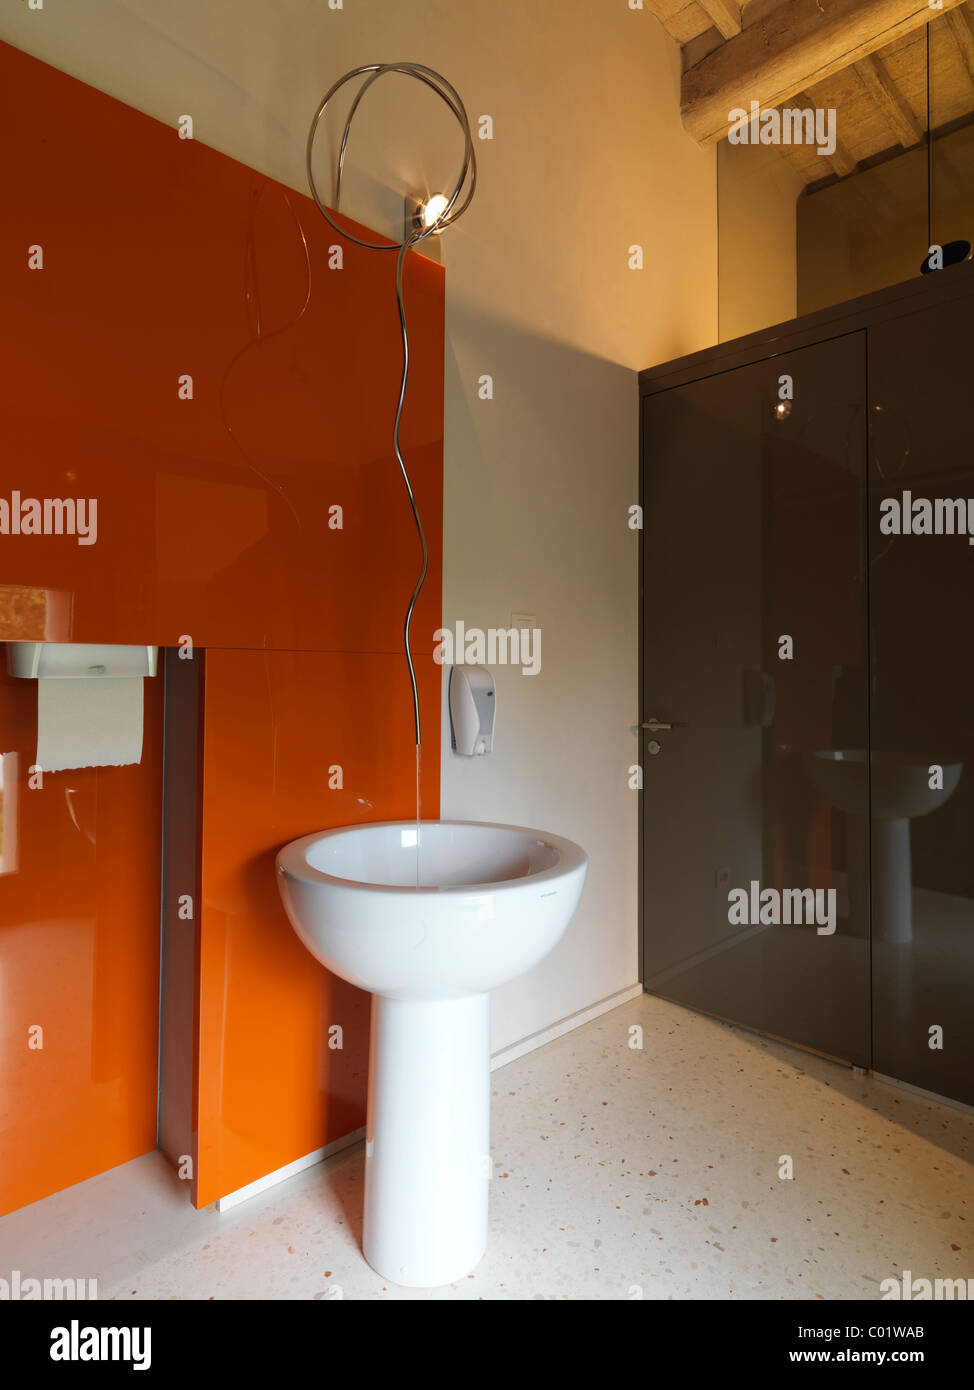 elegant and modern bathroom with orange wall and white ceramic washbasin at column Stock Photo